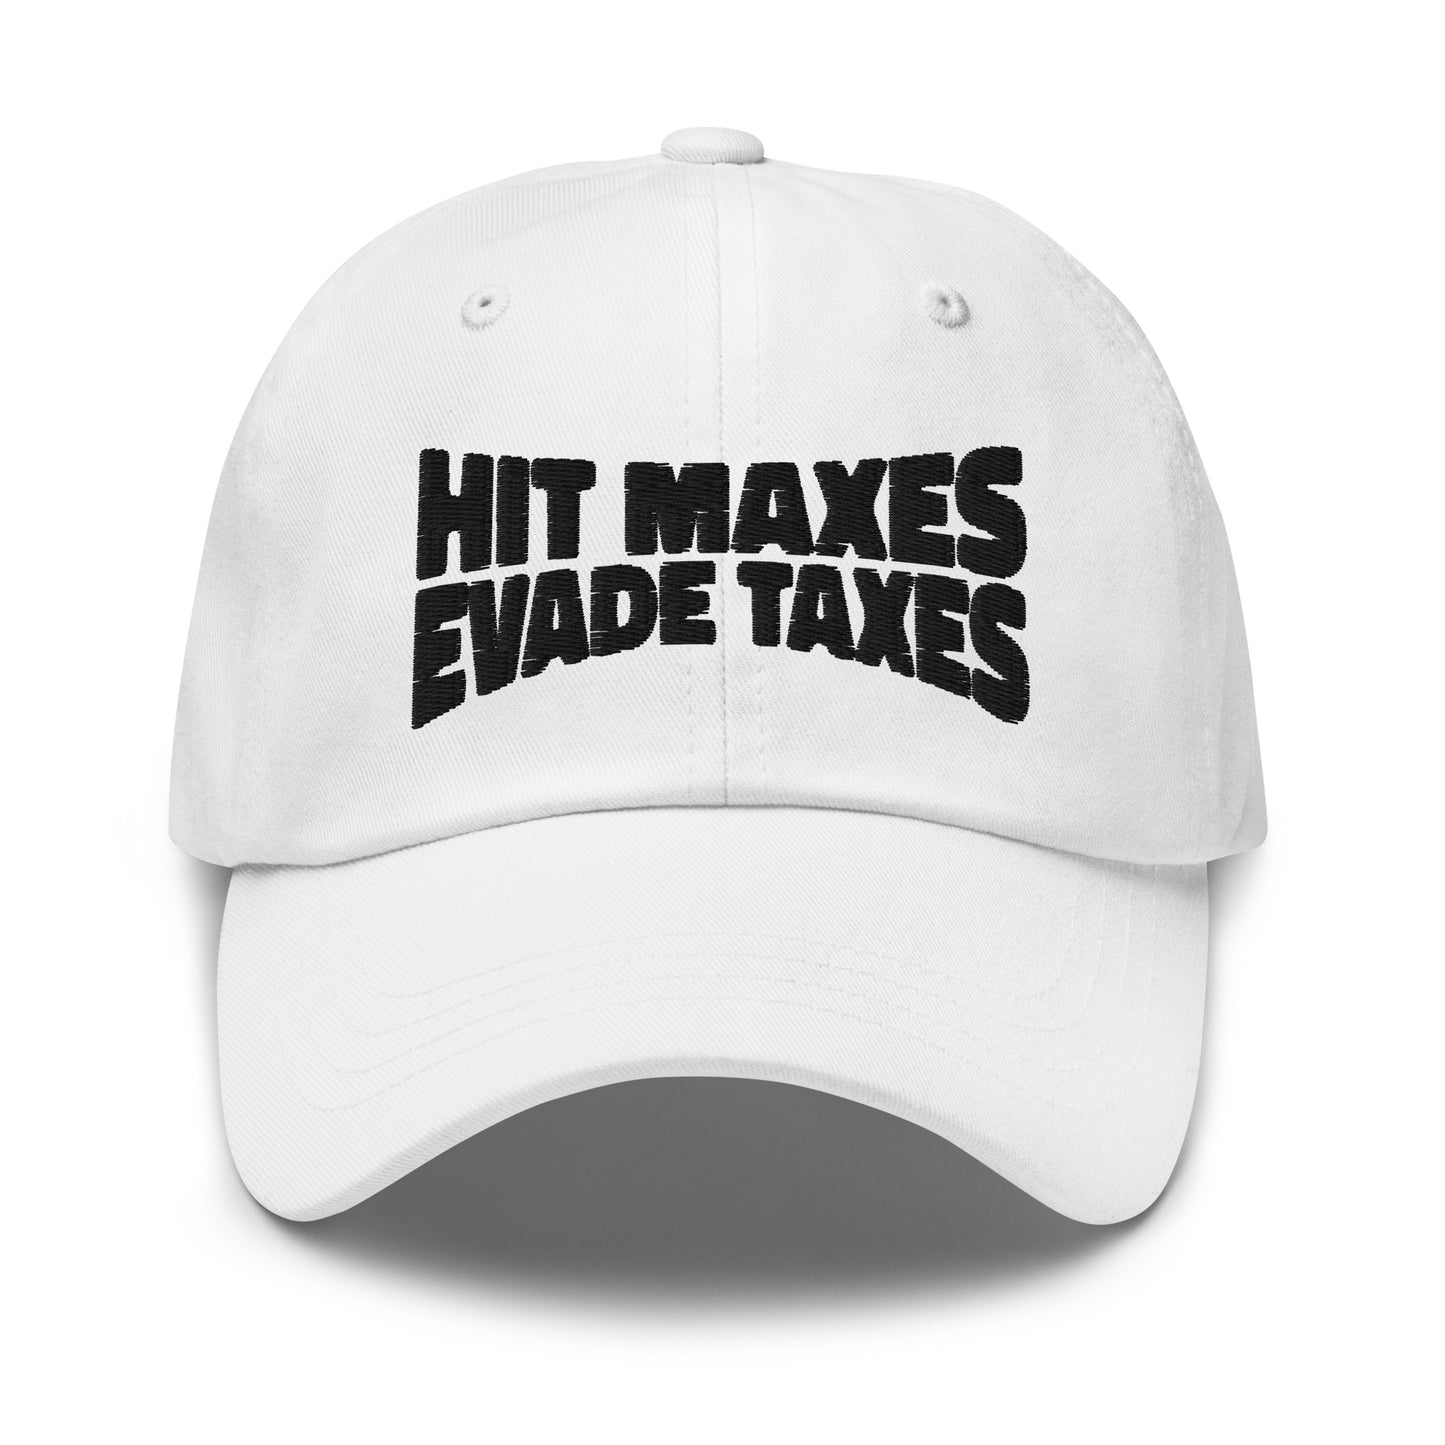 Hit Maxes Evade Taxes hat